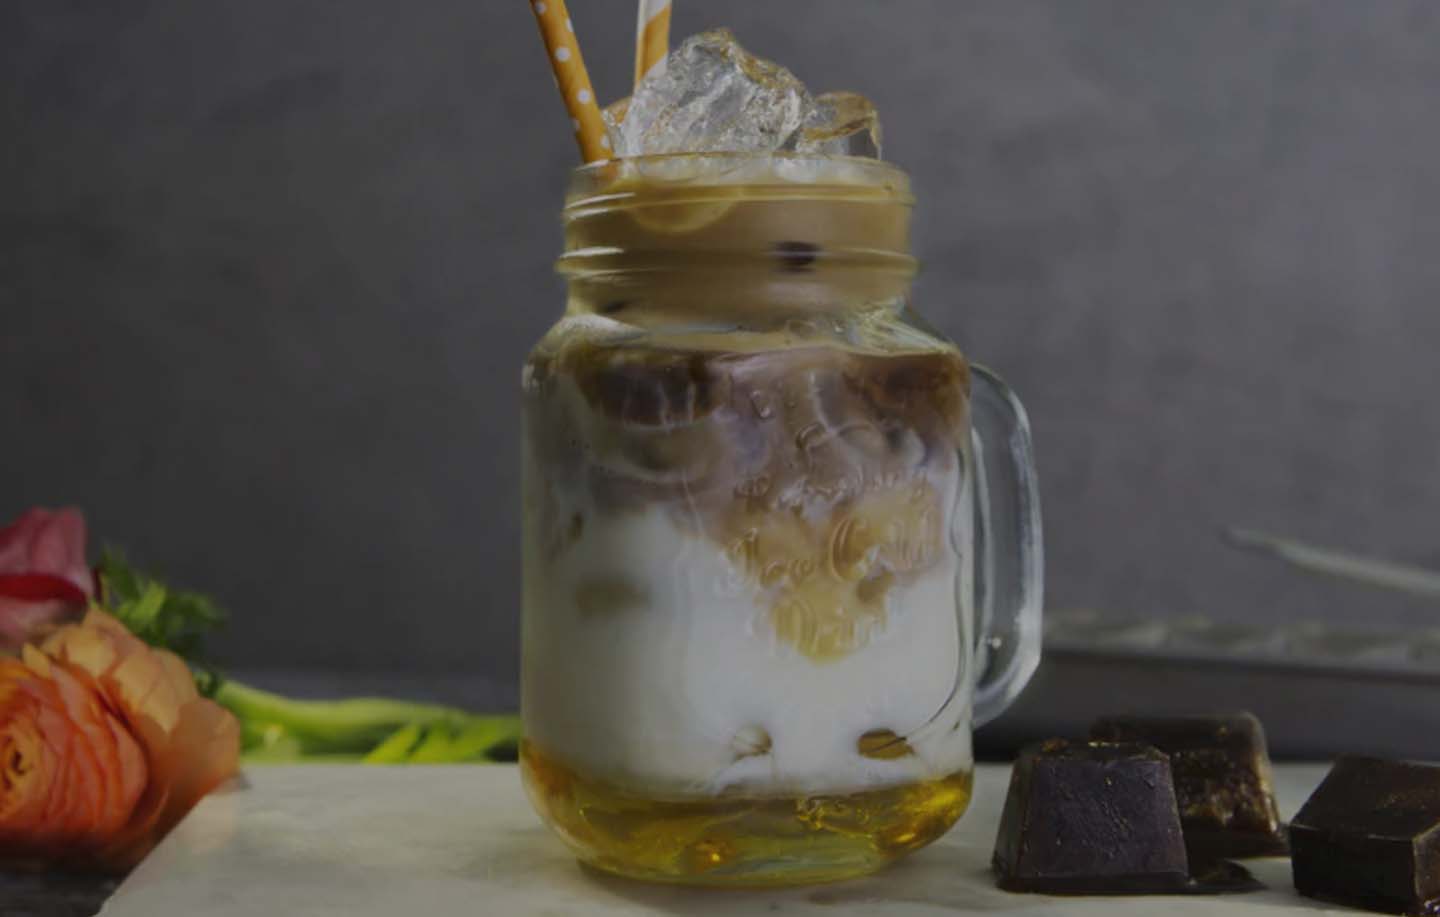 Vanilla Chiller (Skinny Vanilla Iced Coffee Recipe) - imbarista